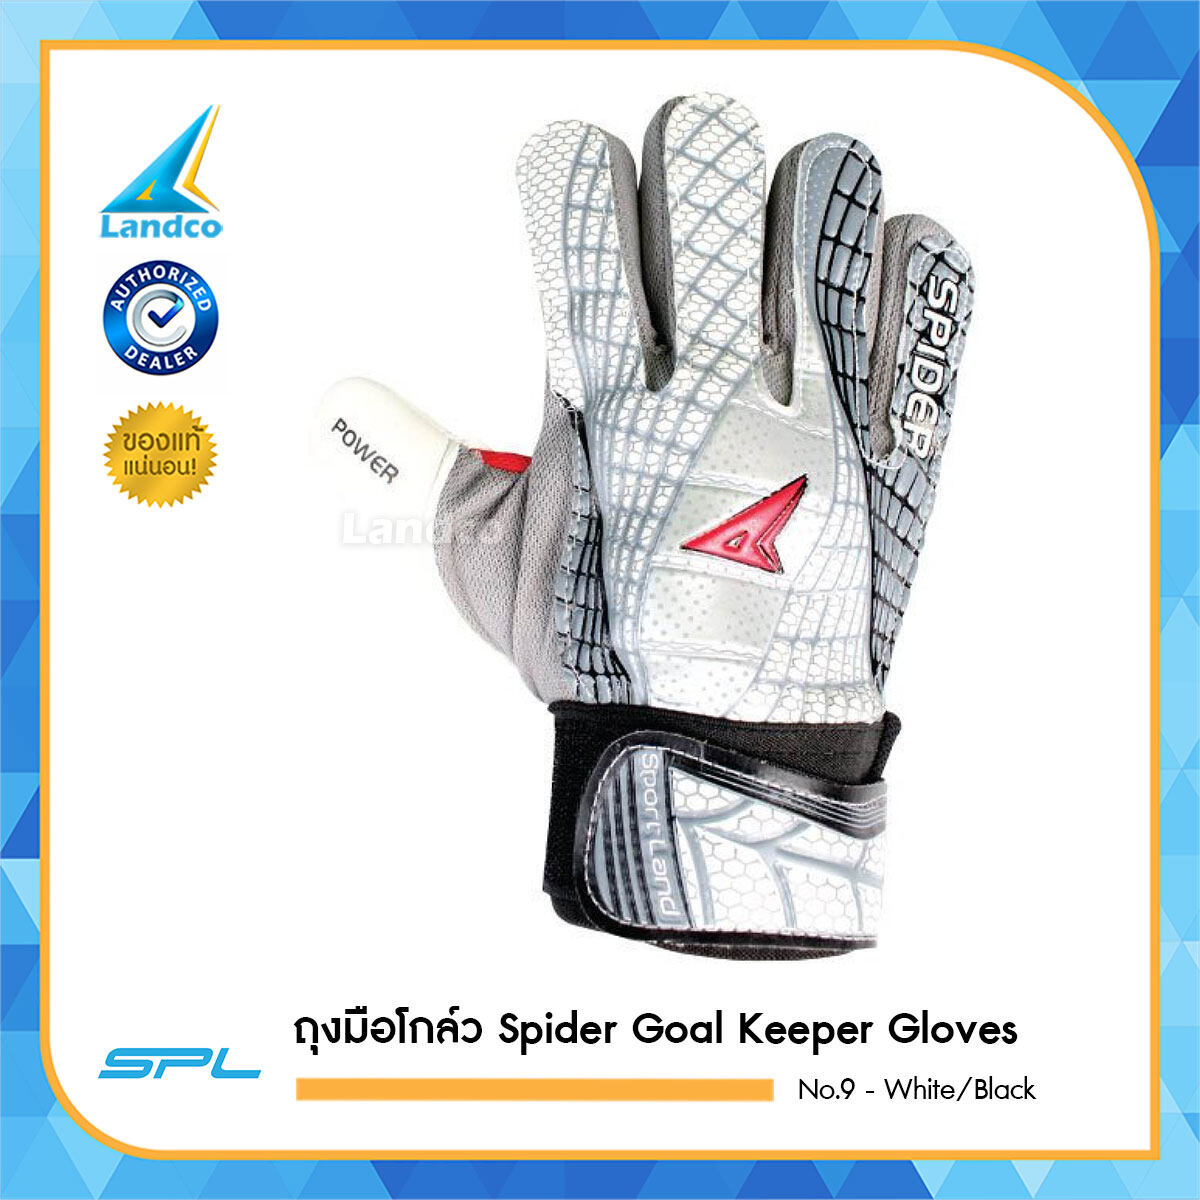 SPORTLAND Spider Goal Keeper Gloves No.9 - White/Black